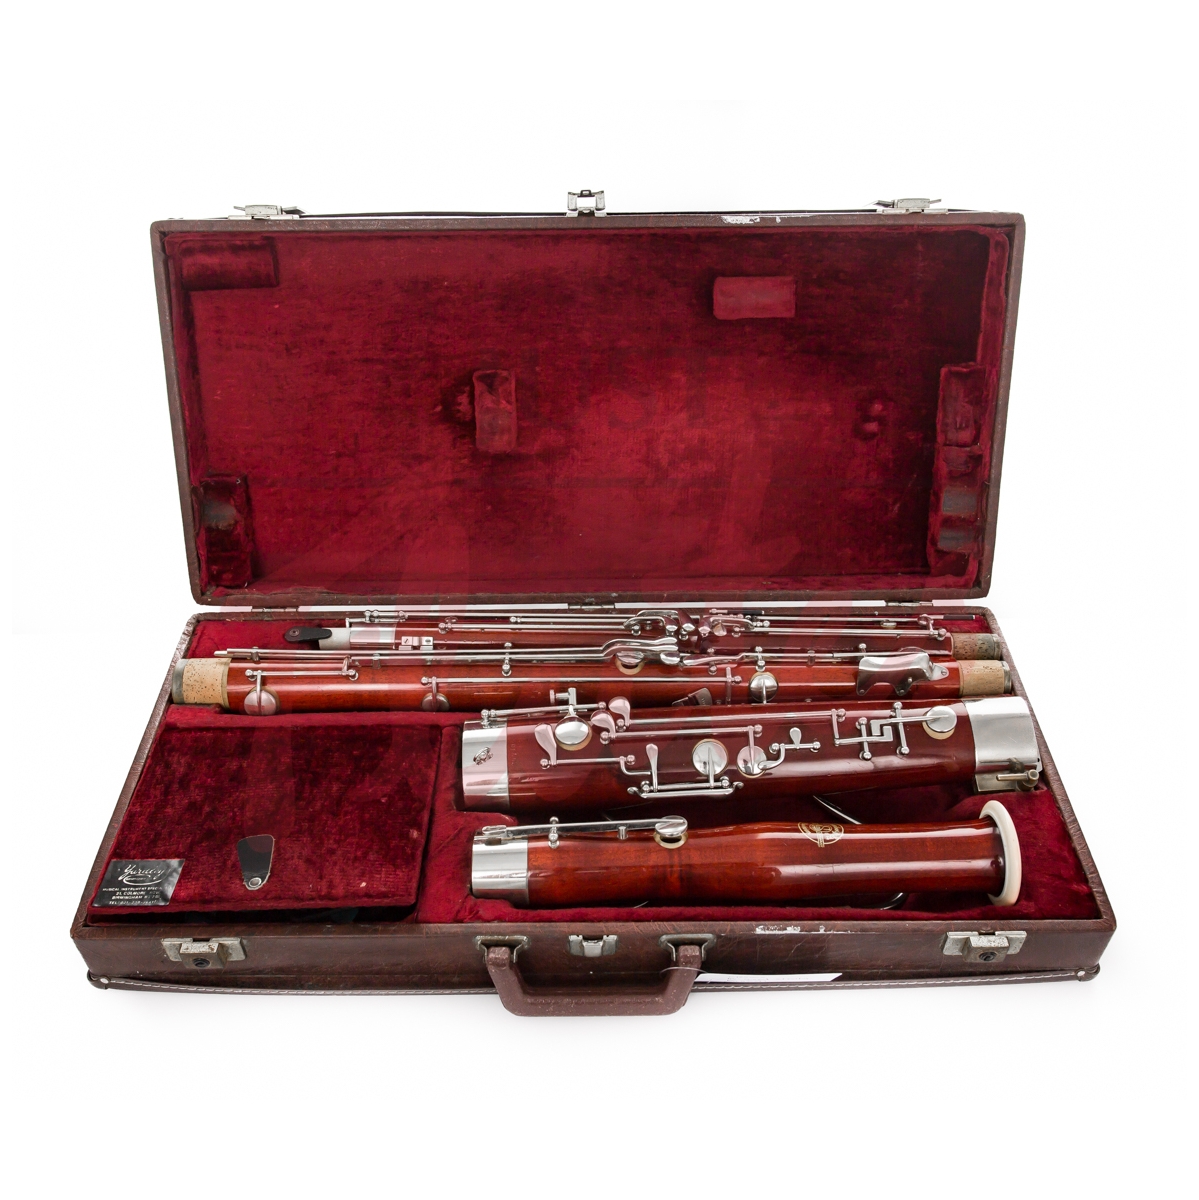 w. schreiber professional bassoon cases